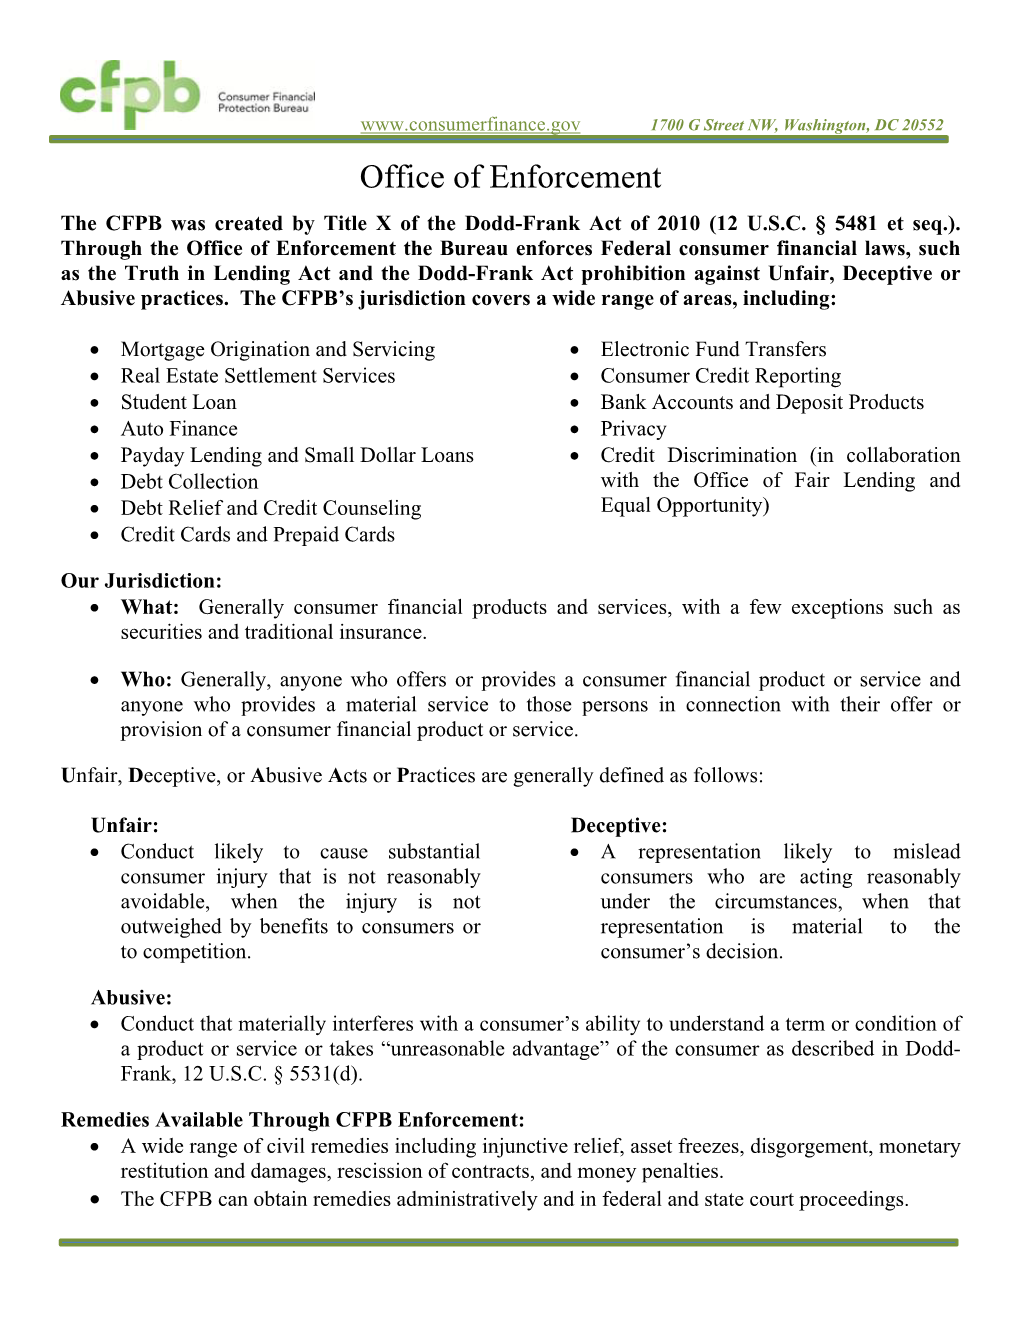 CFPB Office of Enforcement